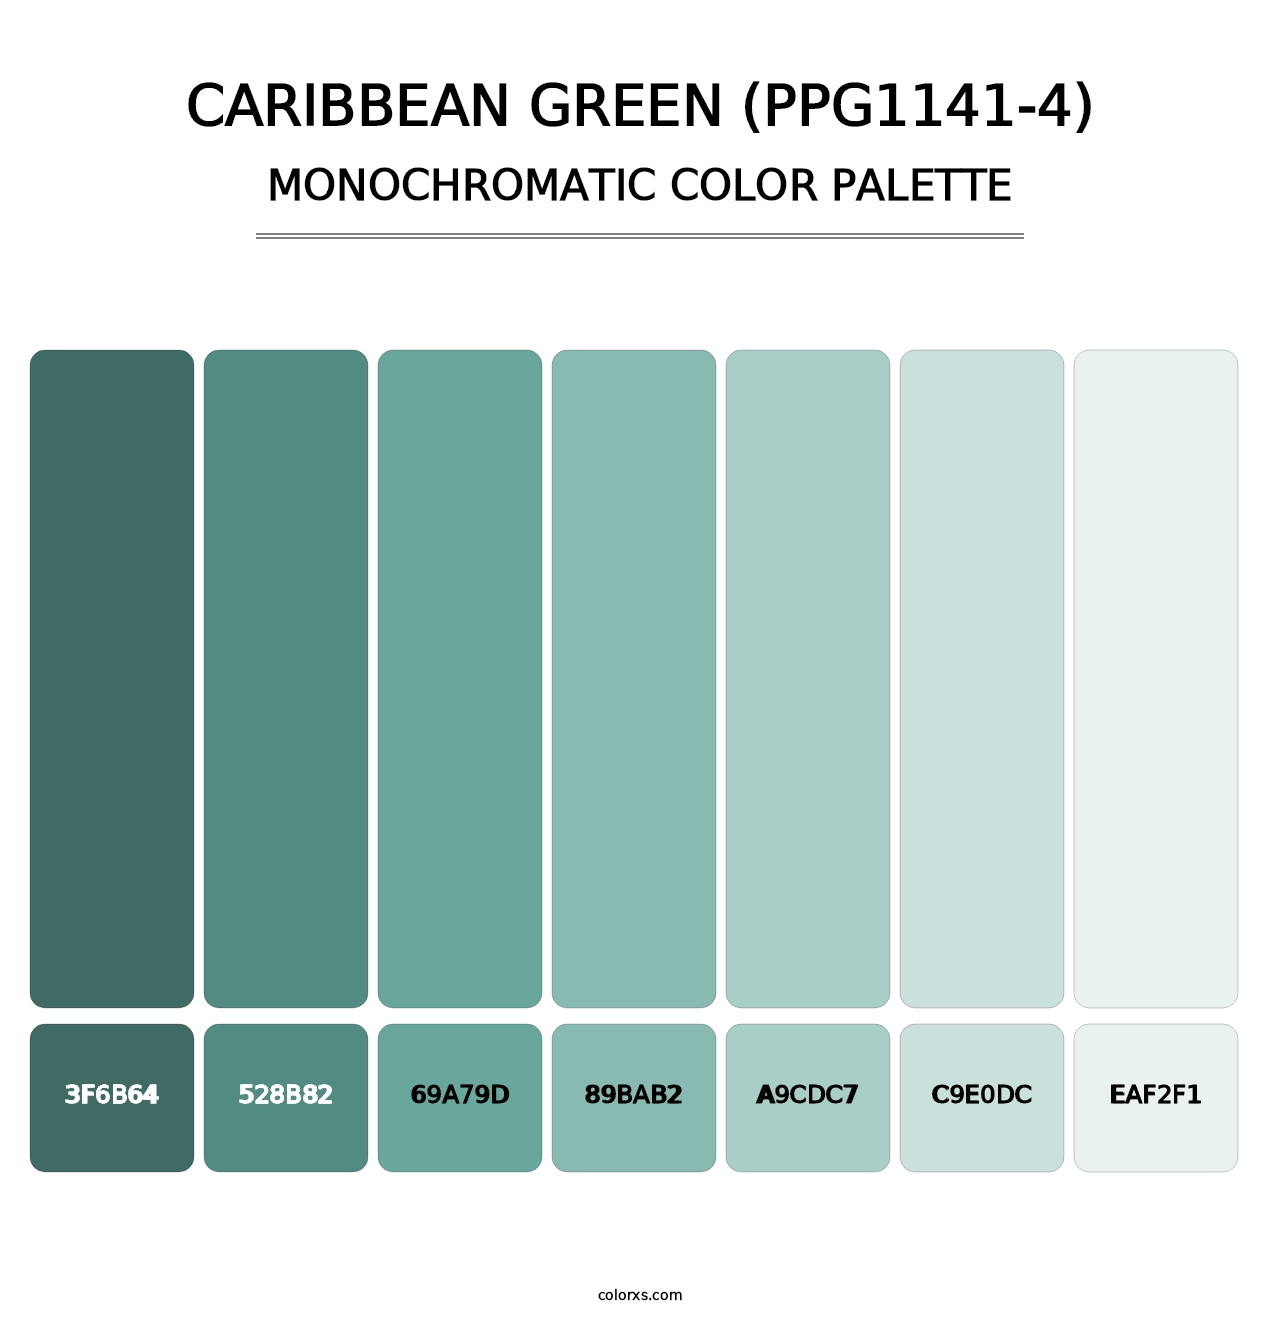 Caribbean Green (PPG1141-4) - Monochromatic Color Palette